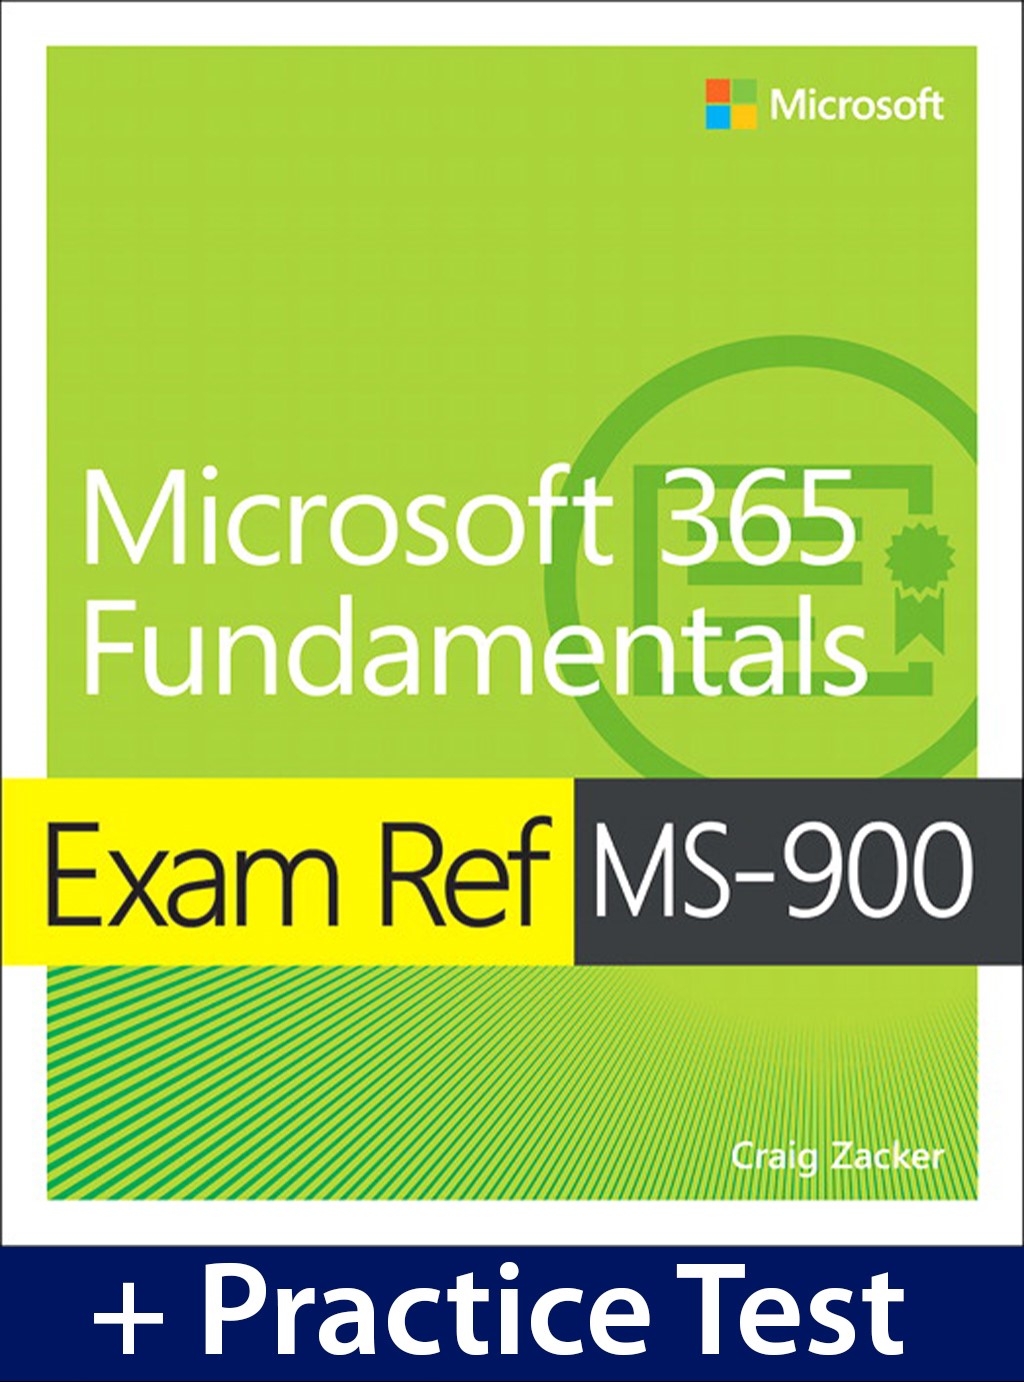 Exam Ref MS-900 Microsoft 365 Fundamentals with Practice Test